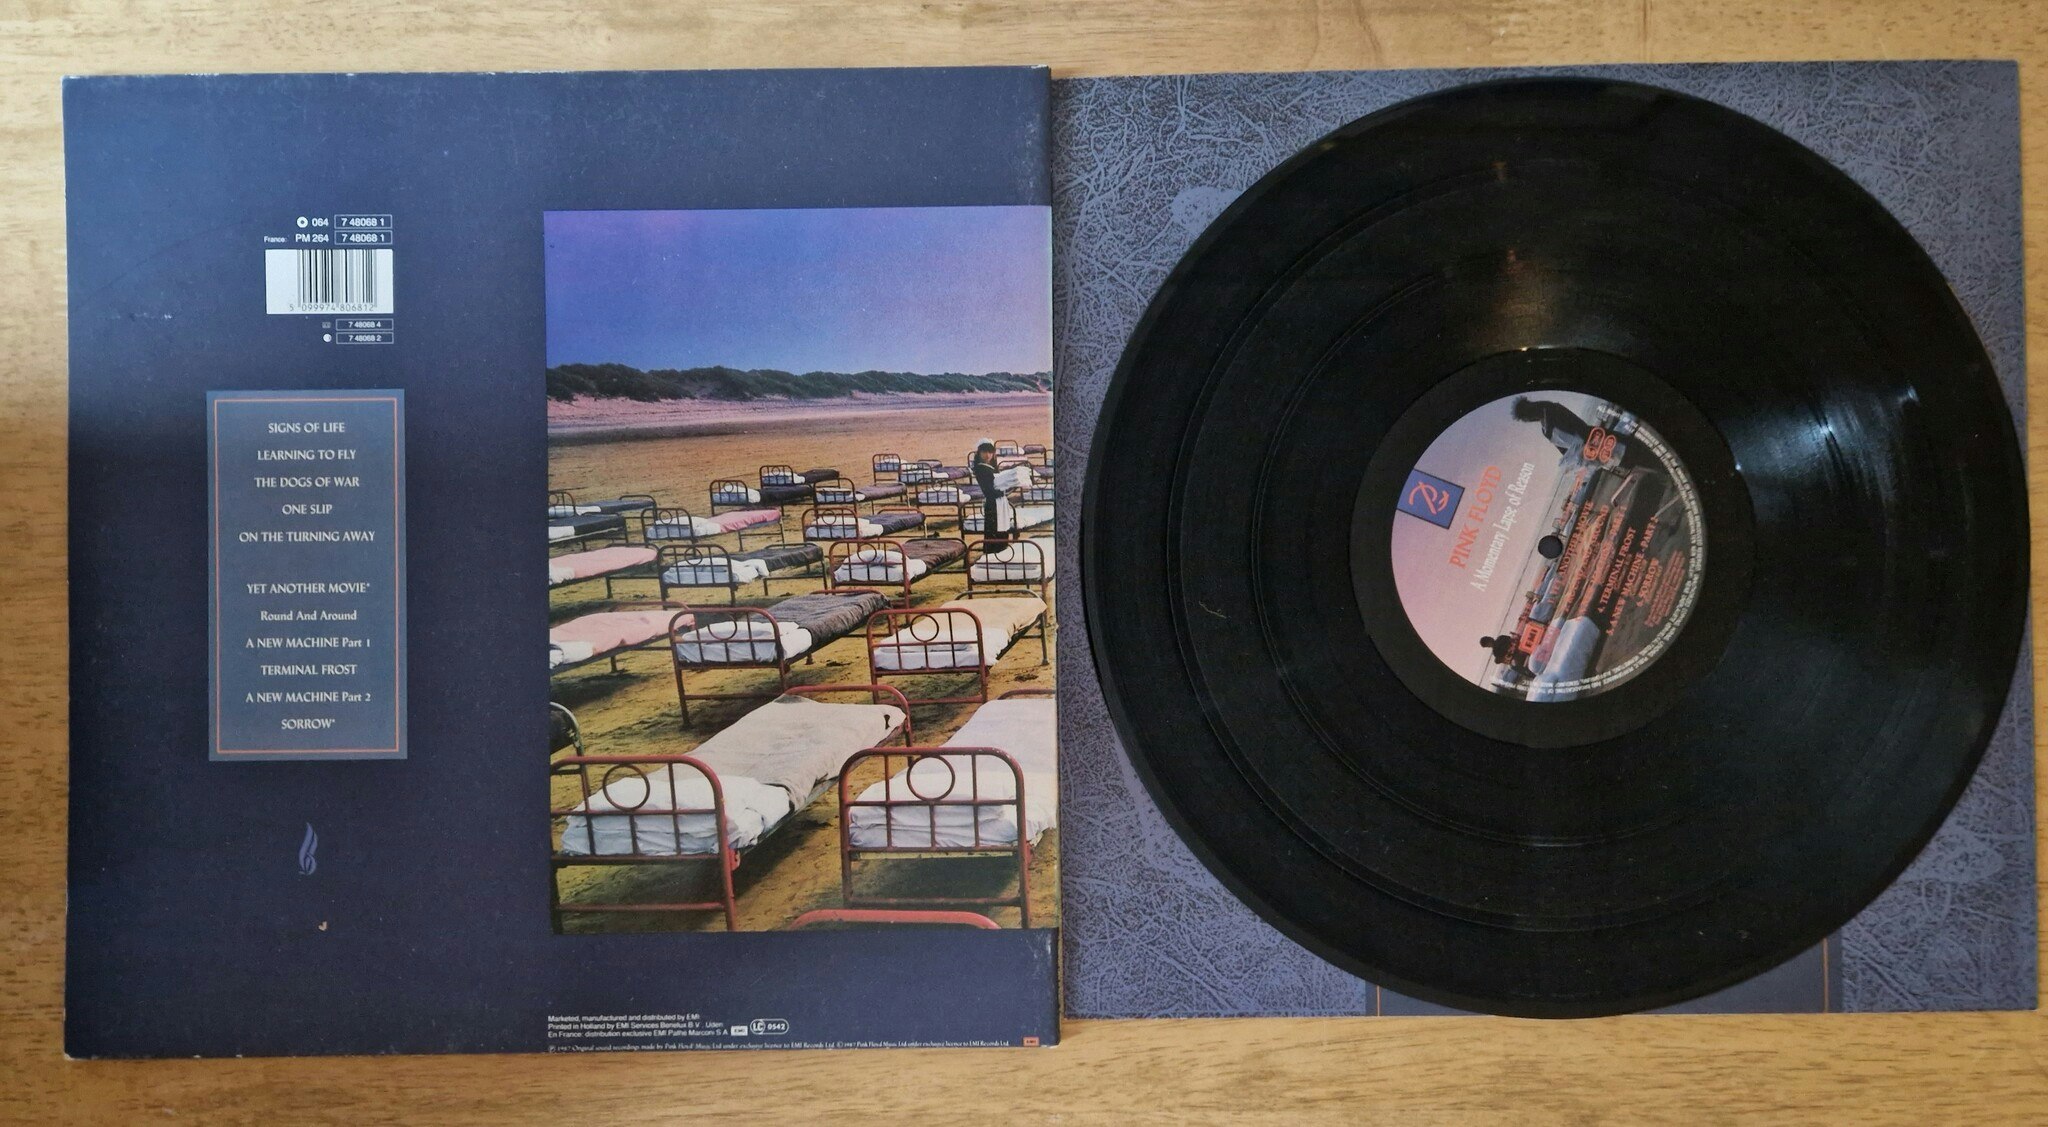 Pink Floyd, A momentary lapse of reason. Vinyl LP